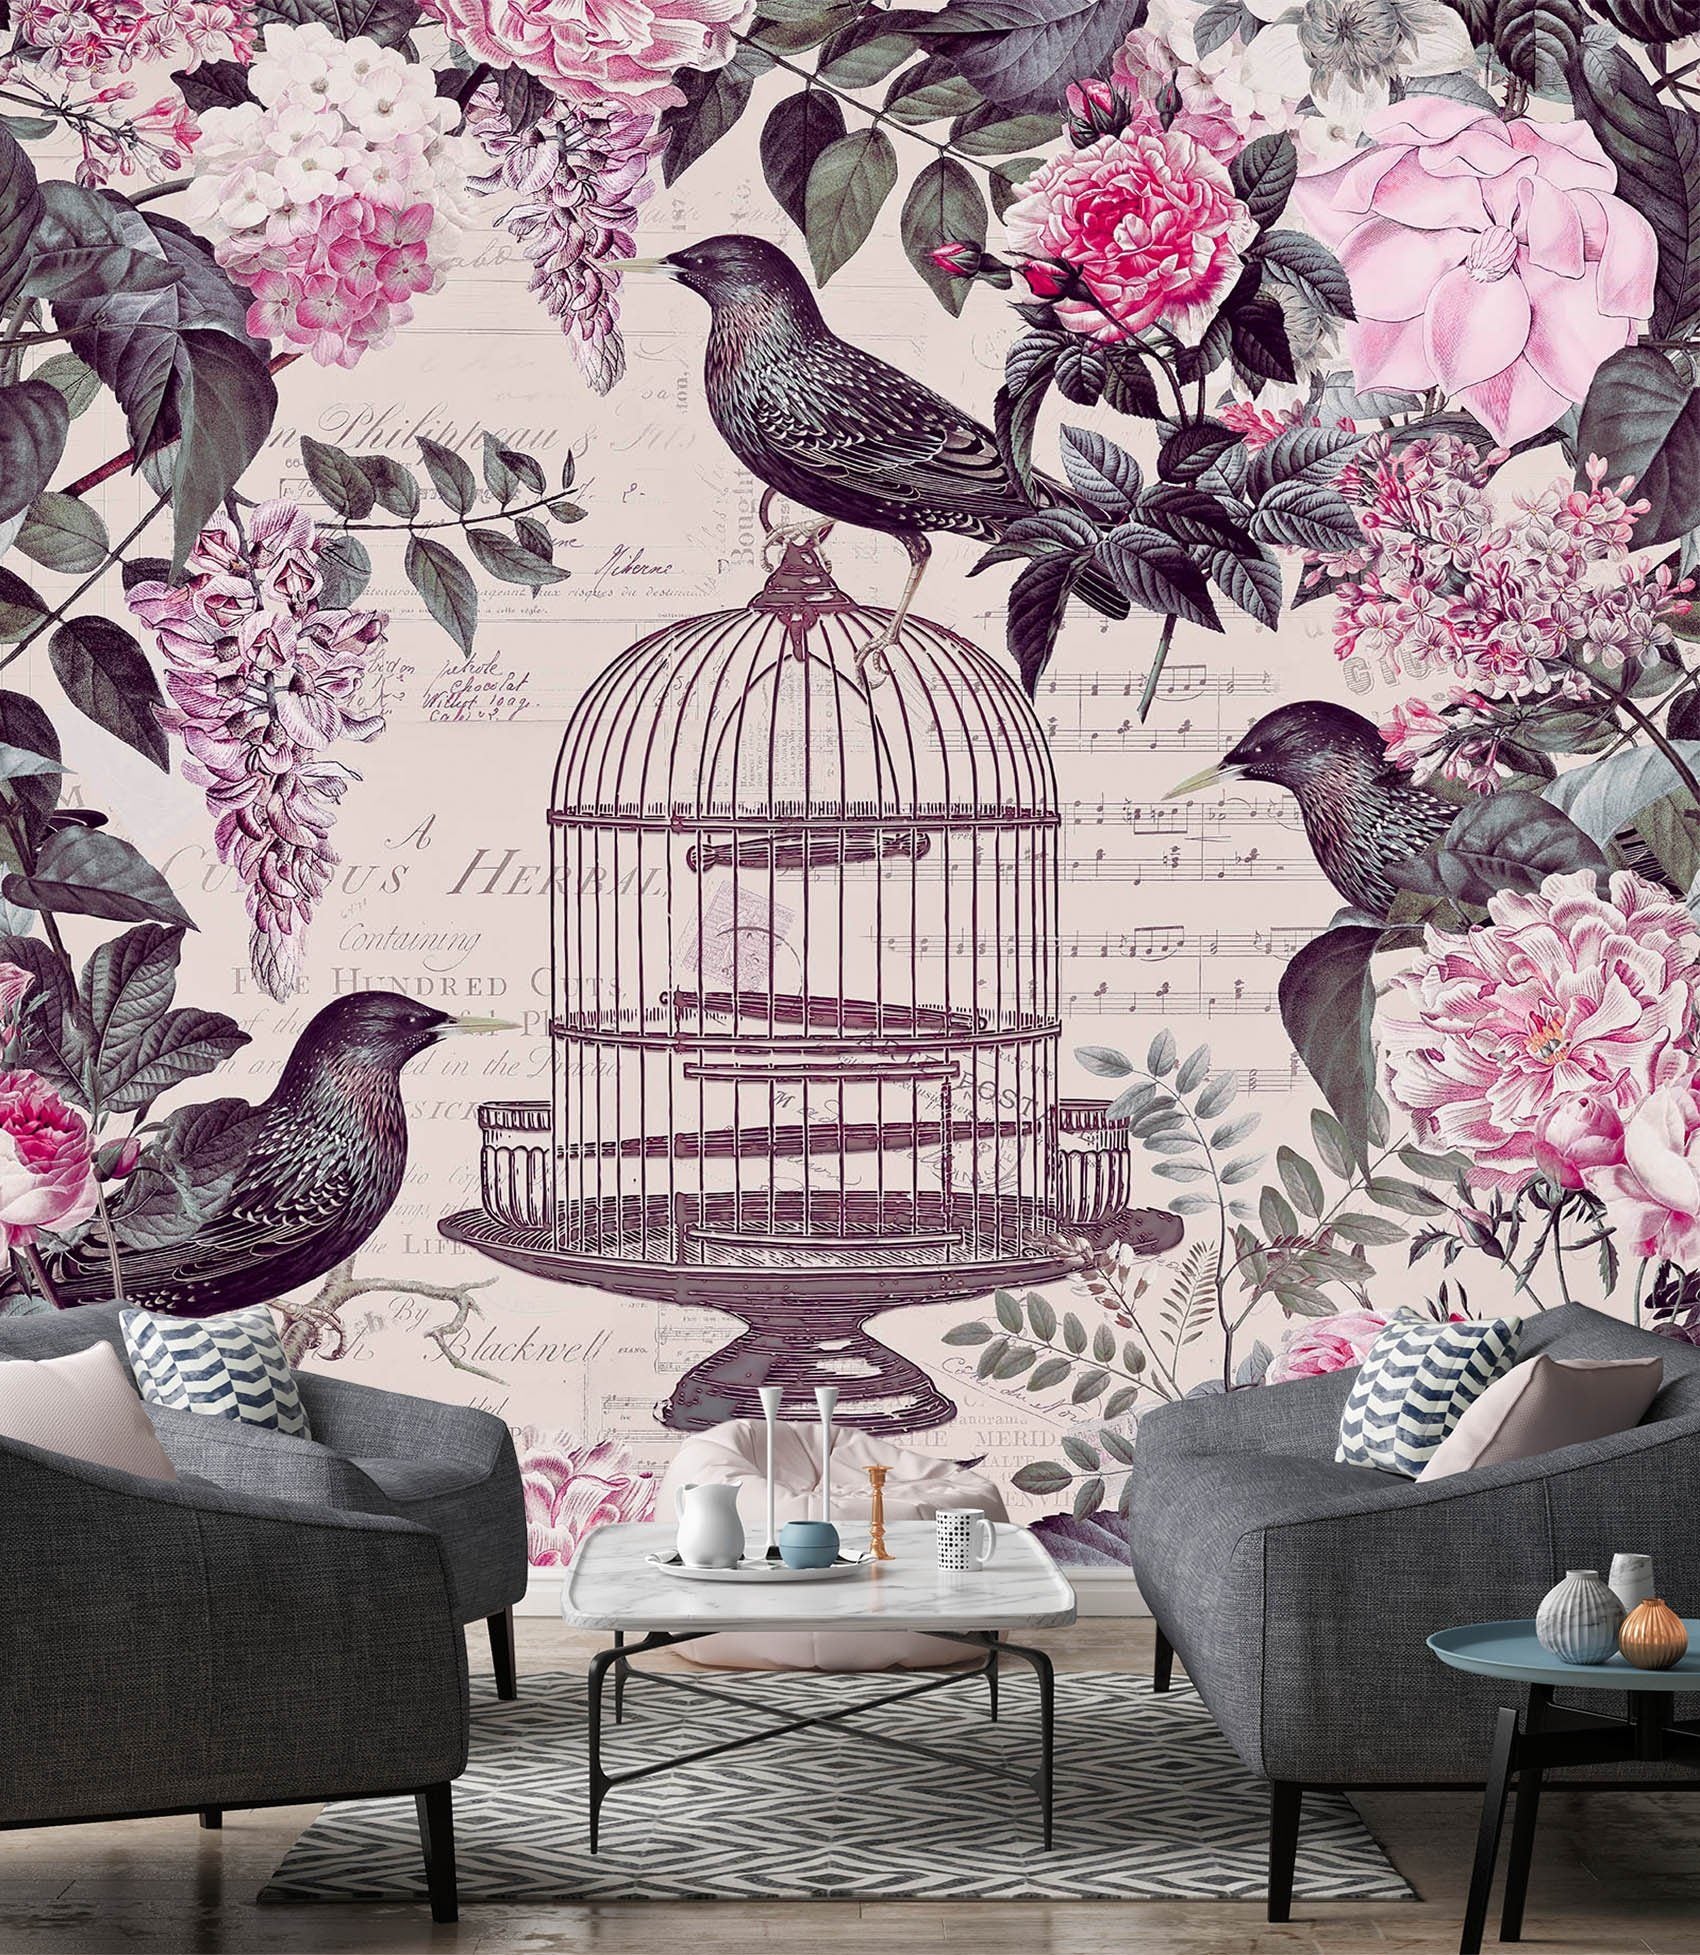 3D Birdcage And Flowers 1439 Andrea haase Wall Mural Wall Murals Wallpaper AJ Wallpaper 2 